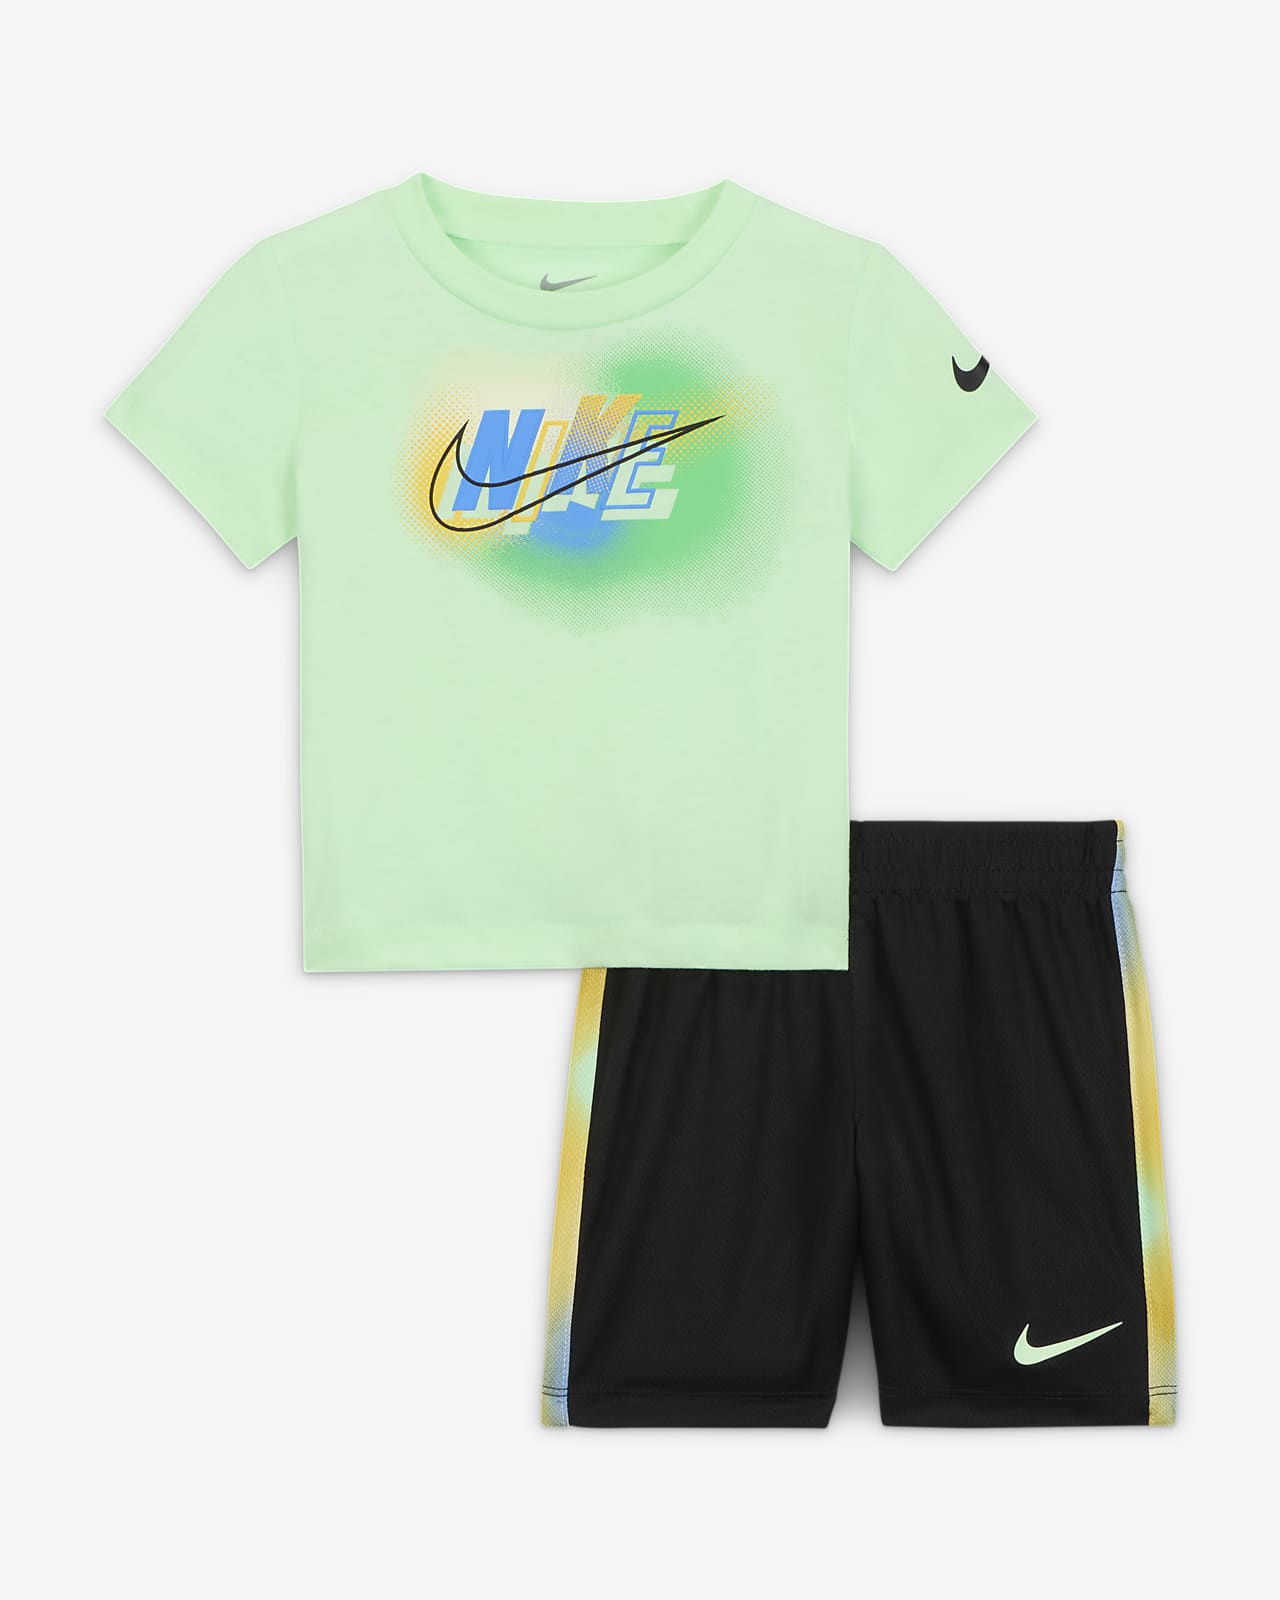 Completo con shorts Nike Hazy Rays – Bebè (12-24 mesi)